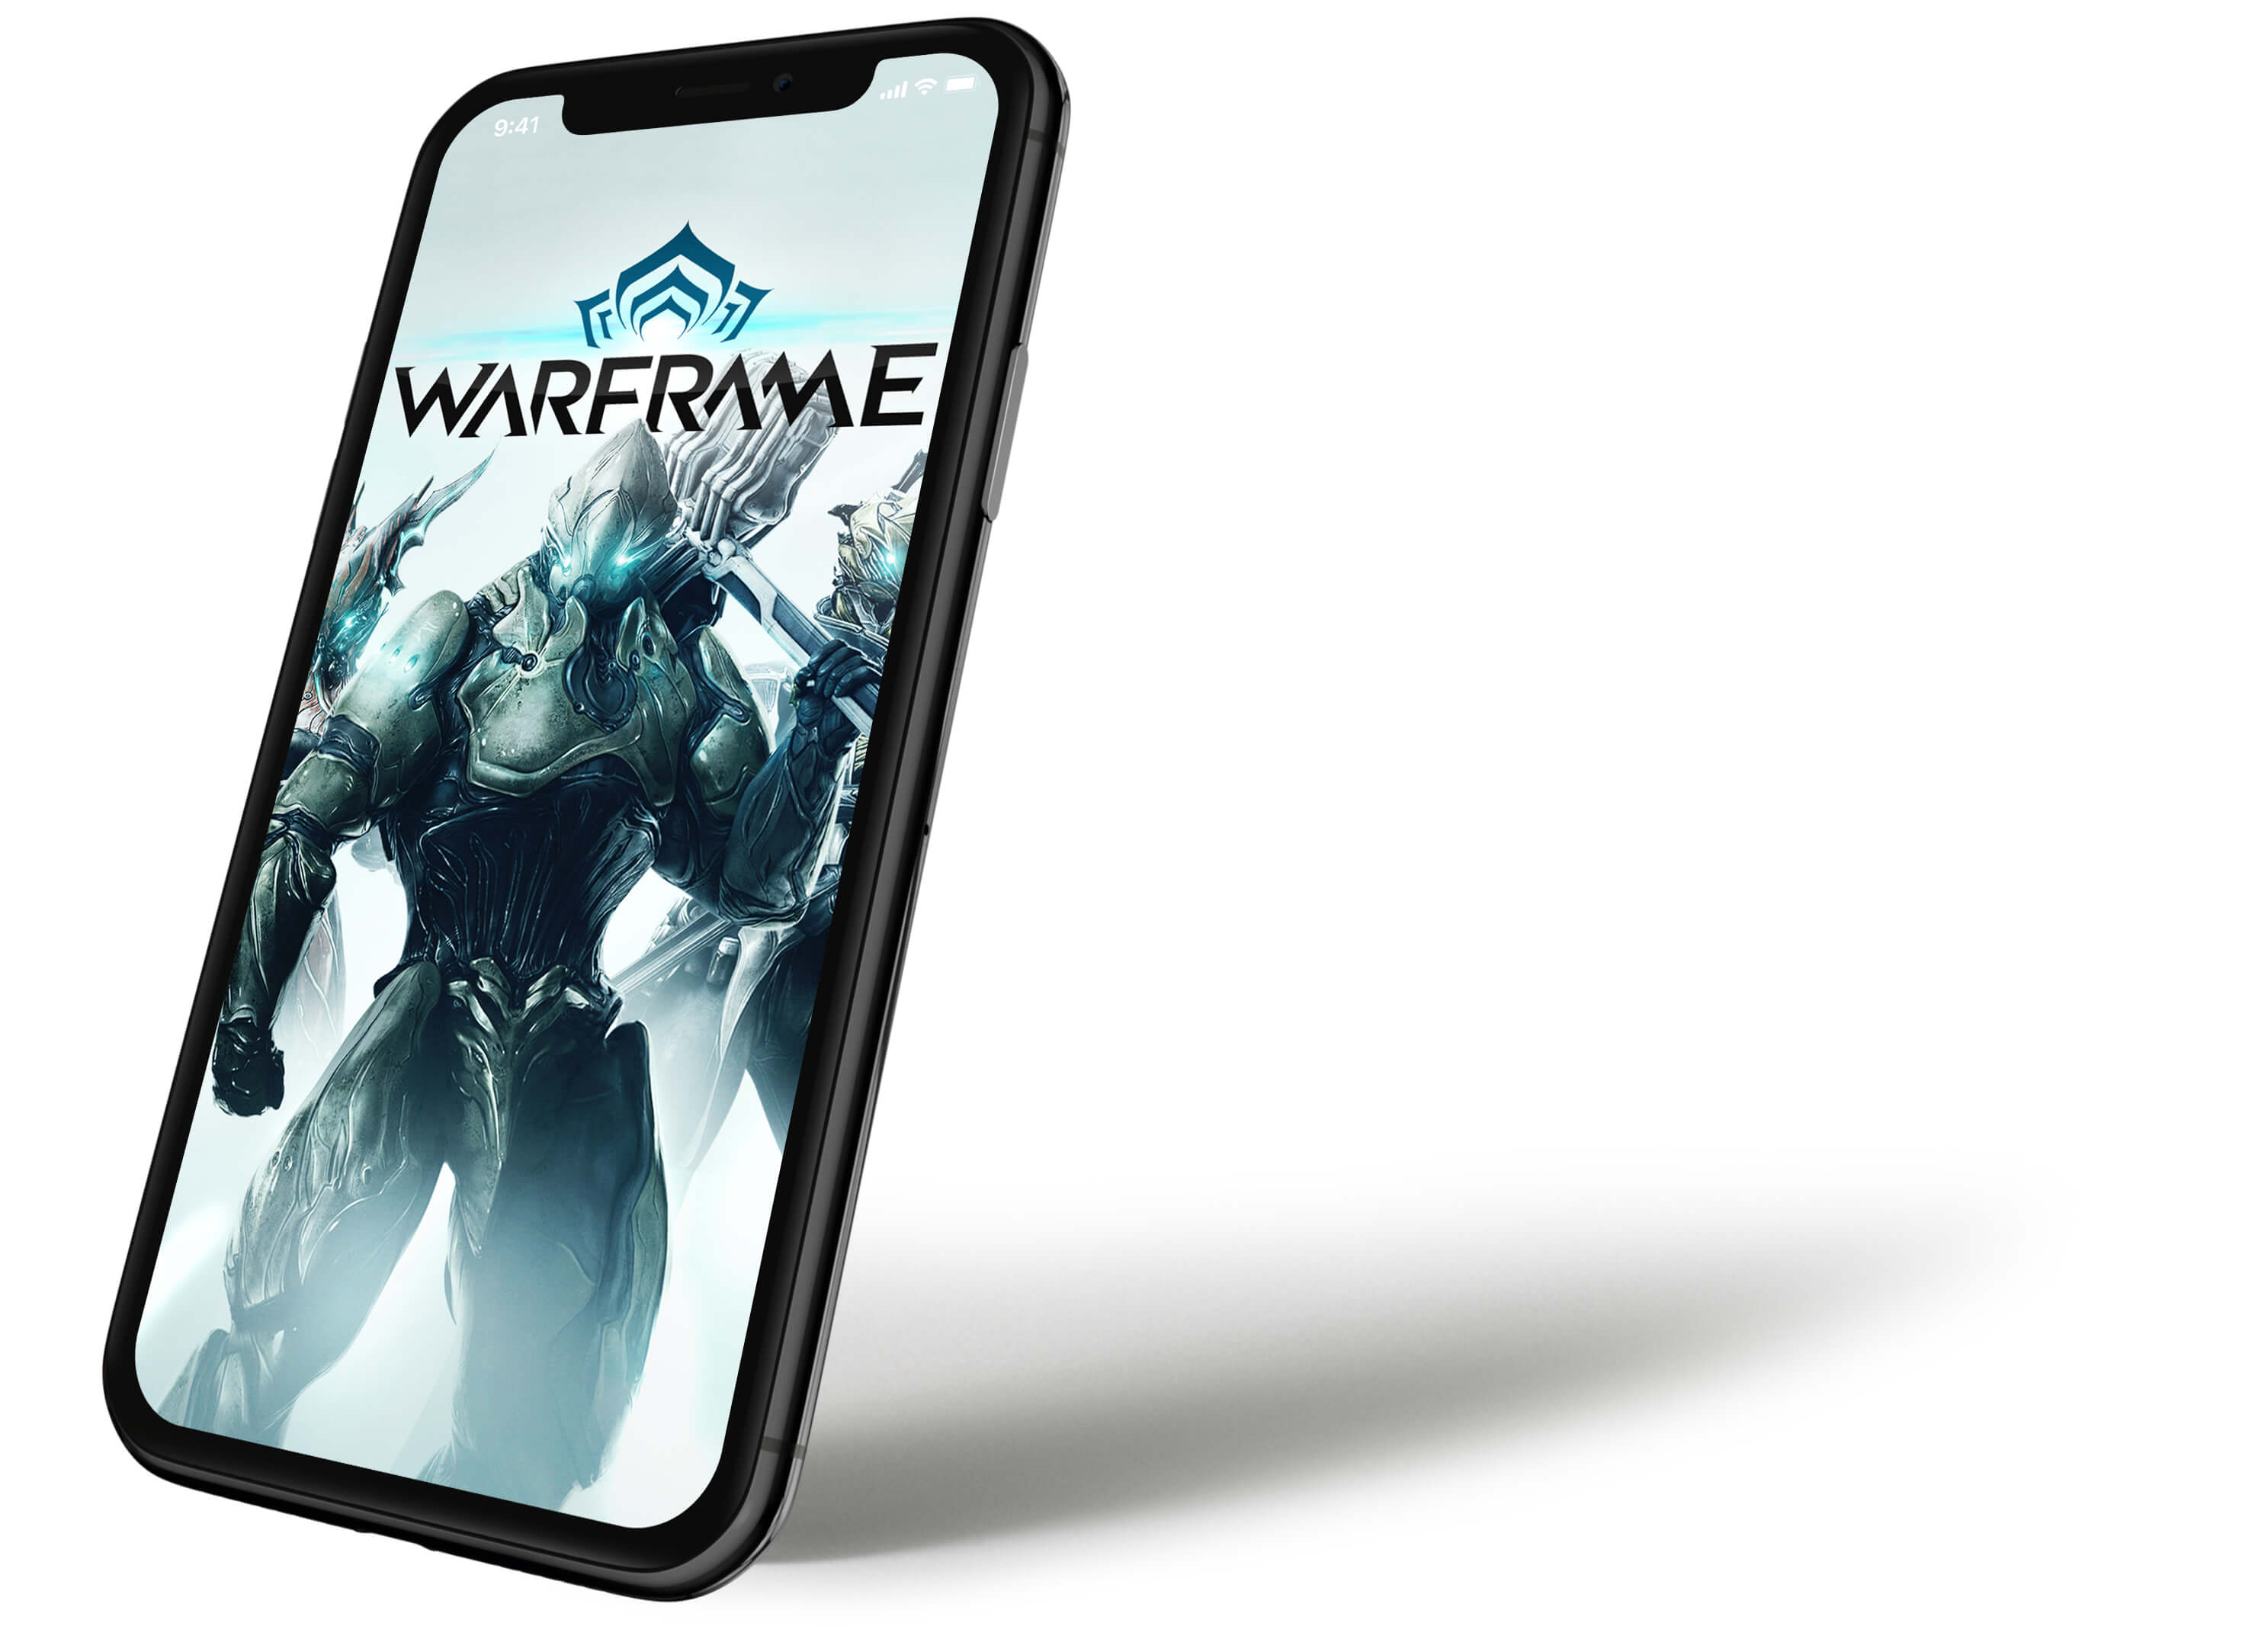 3D Phone with Warframe companion app on screen